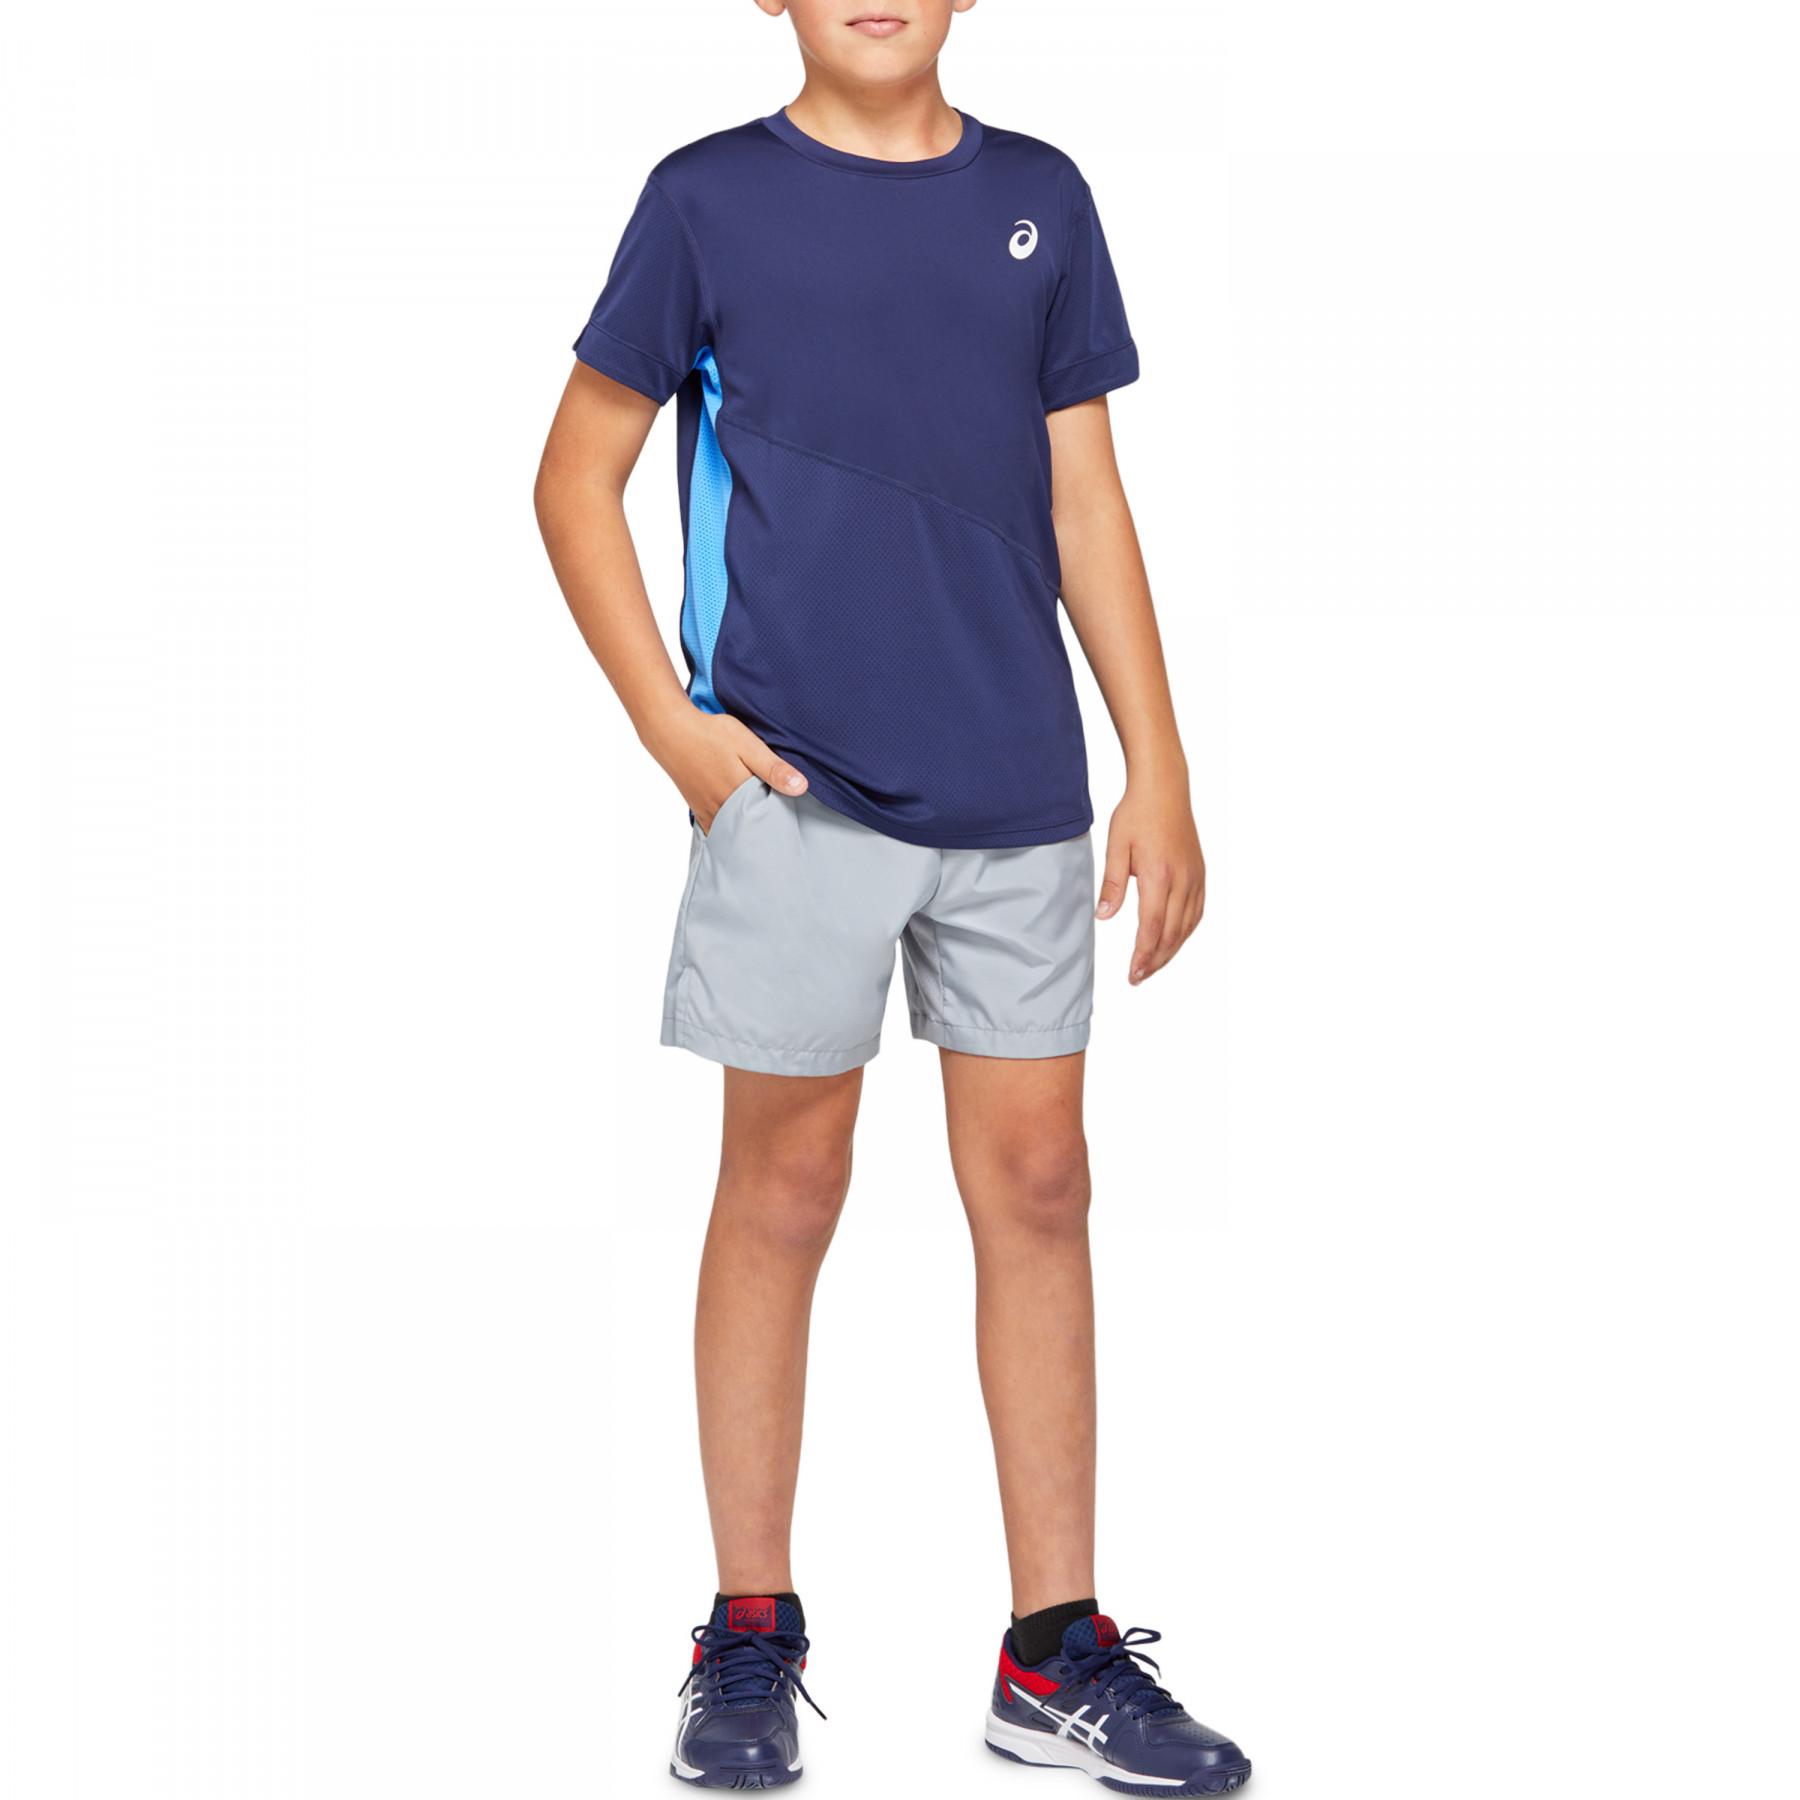 Kinder-T-shirt Asics Tennis Club